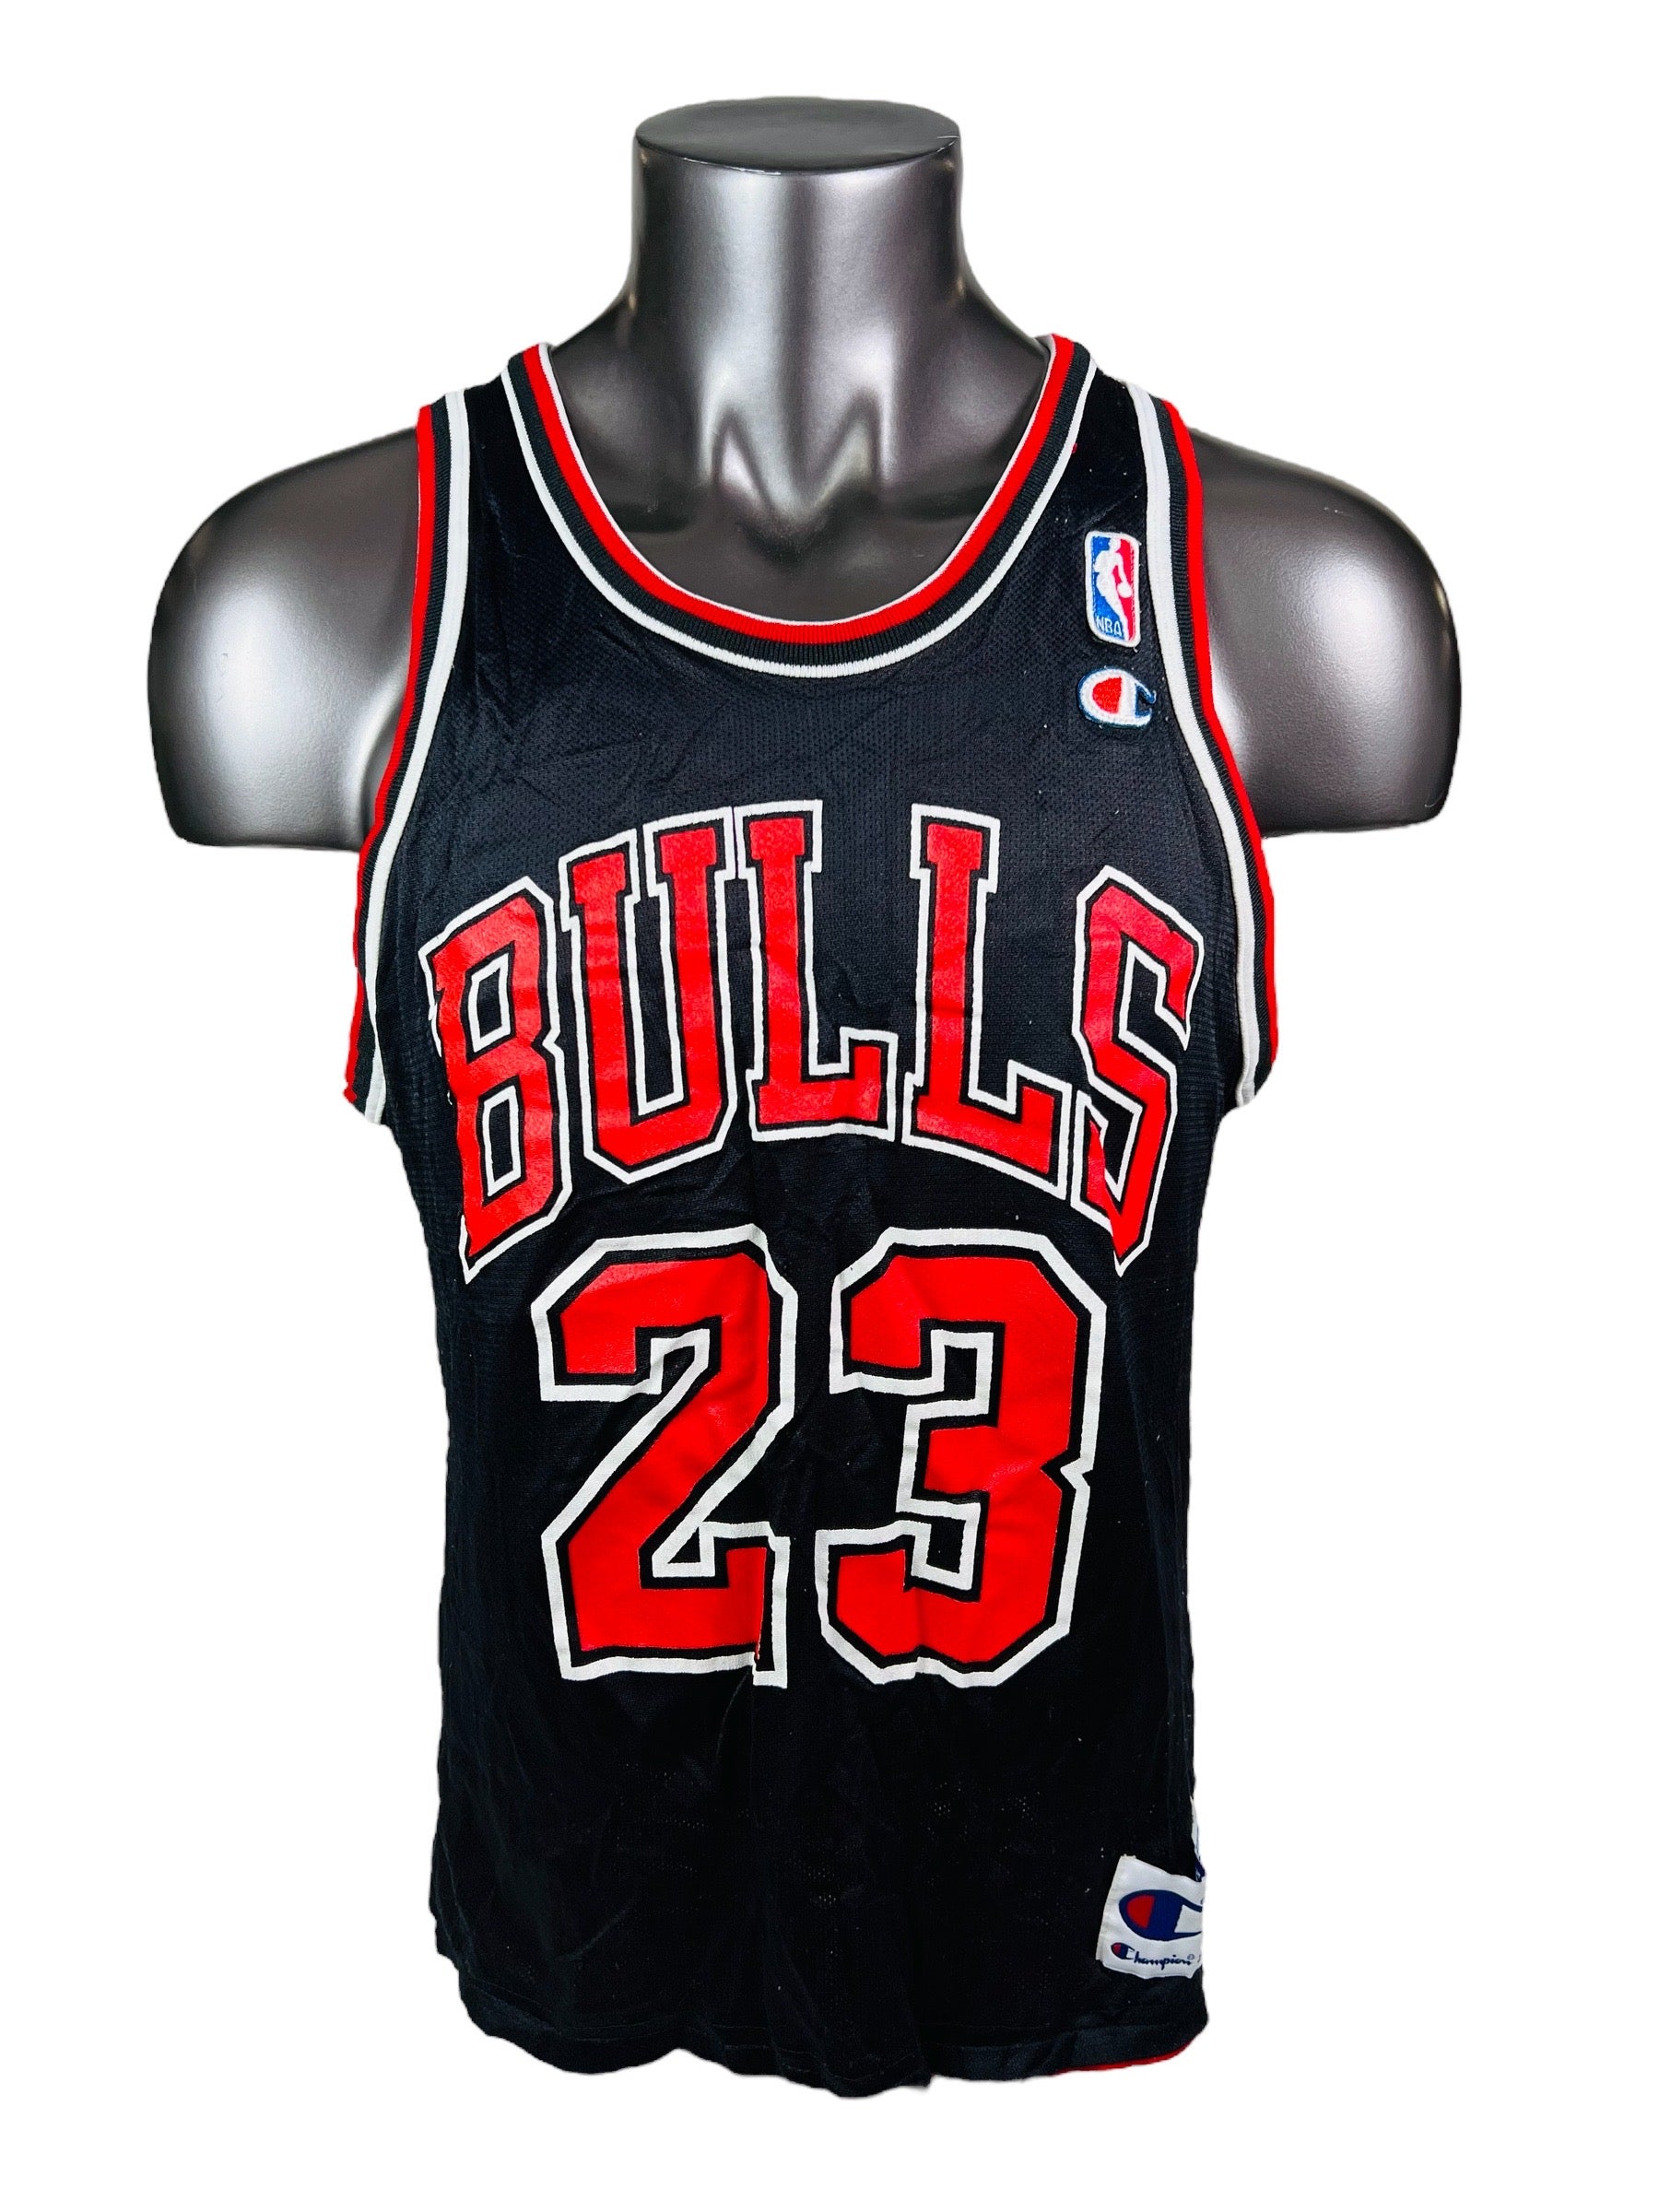 buy chicago bulls jersey